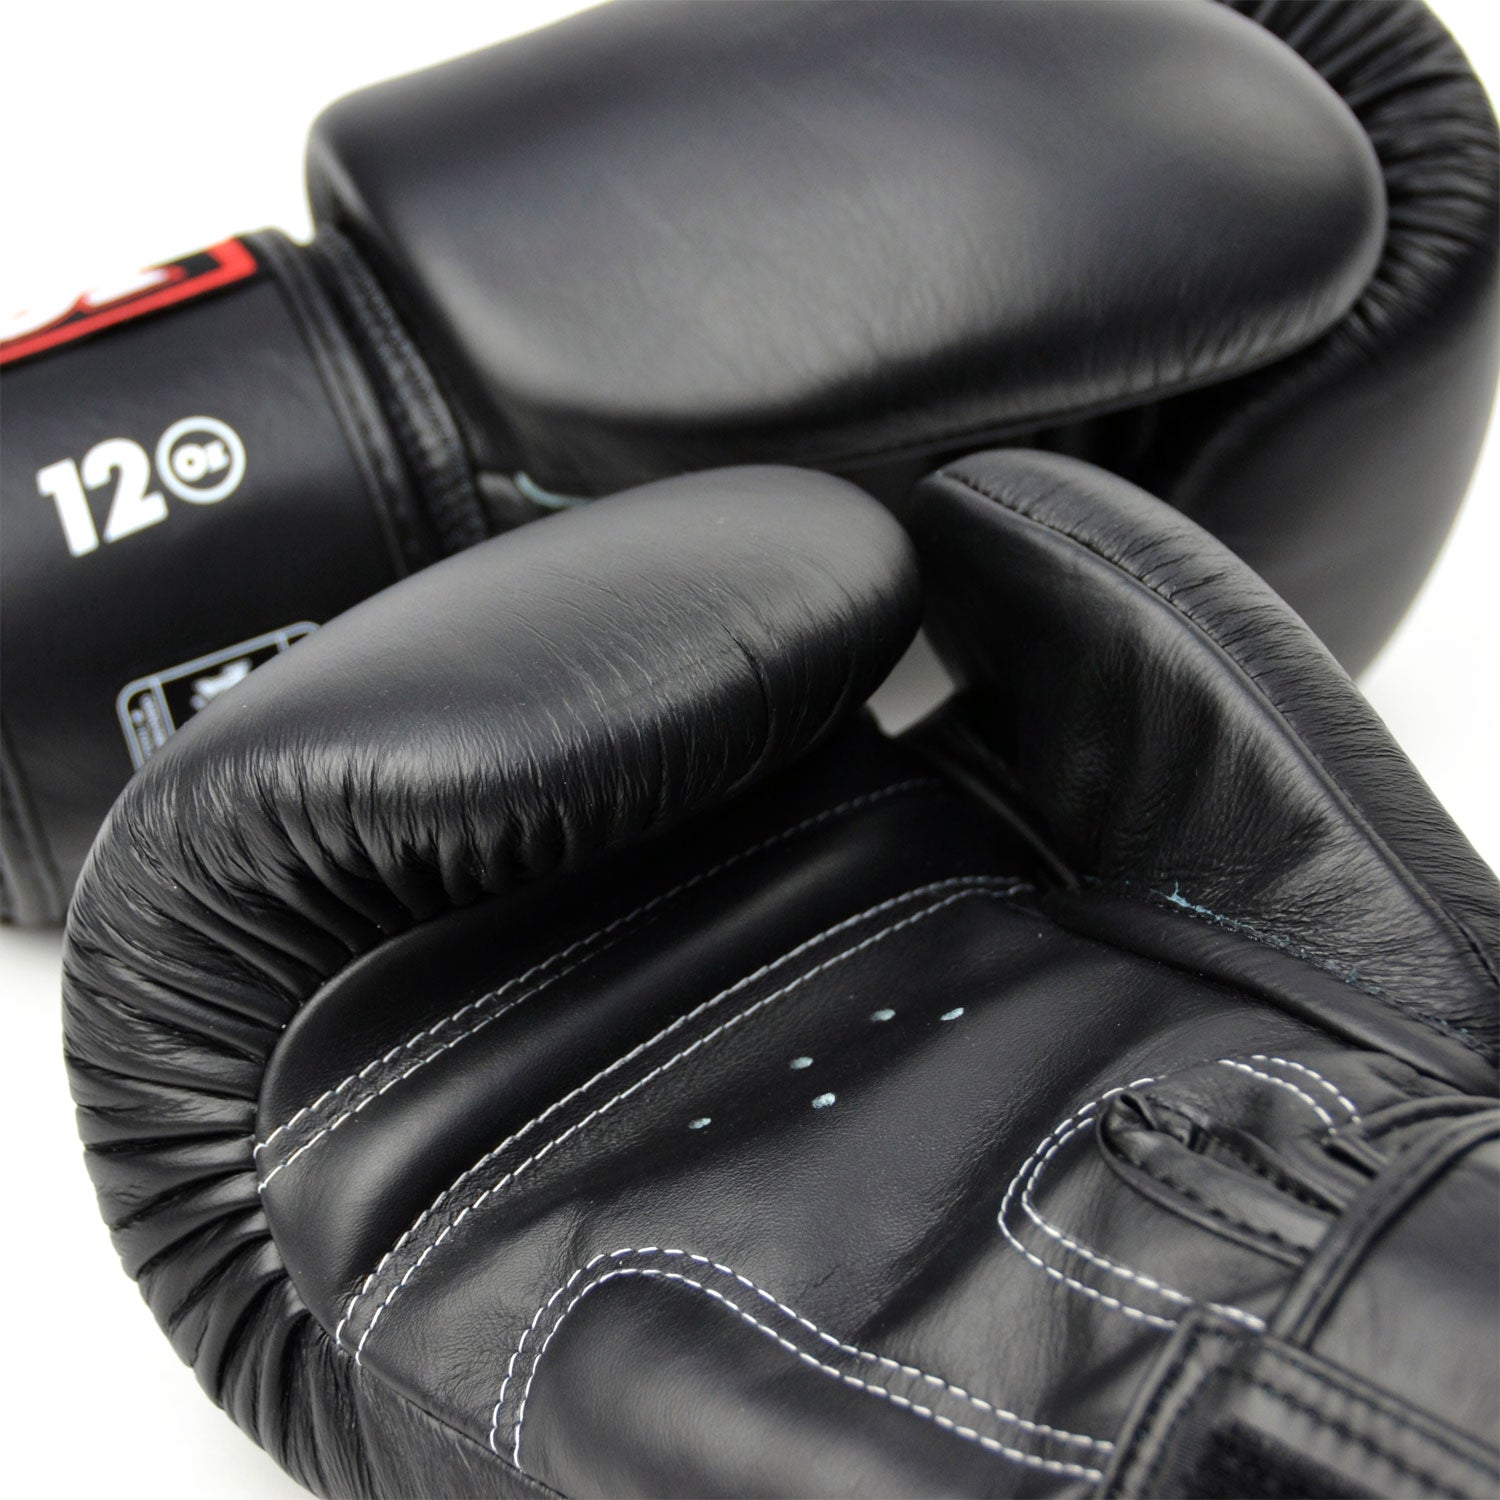 BGVL3 Twins Black Boxing Gloves